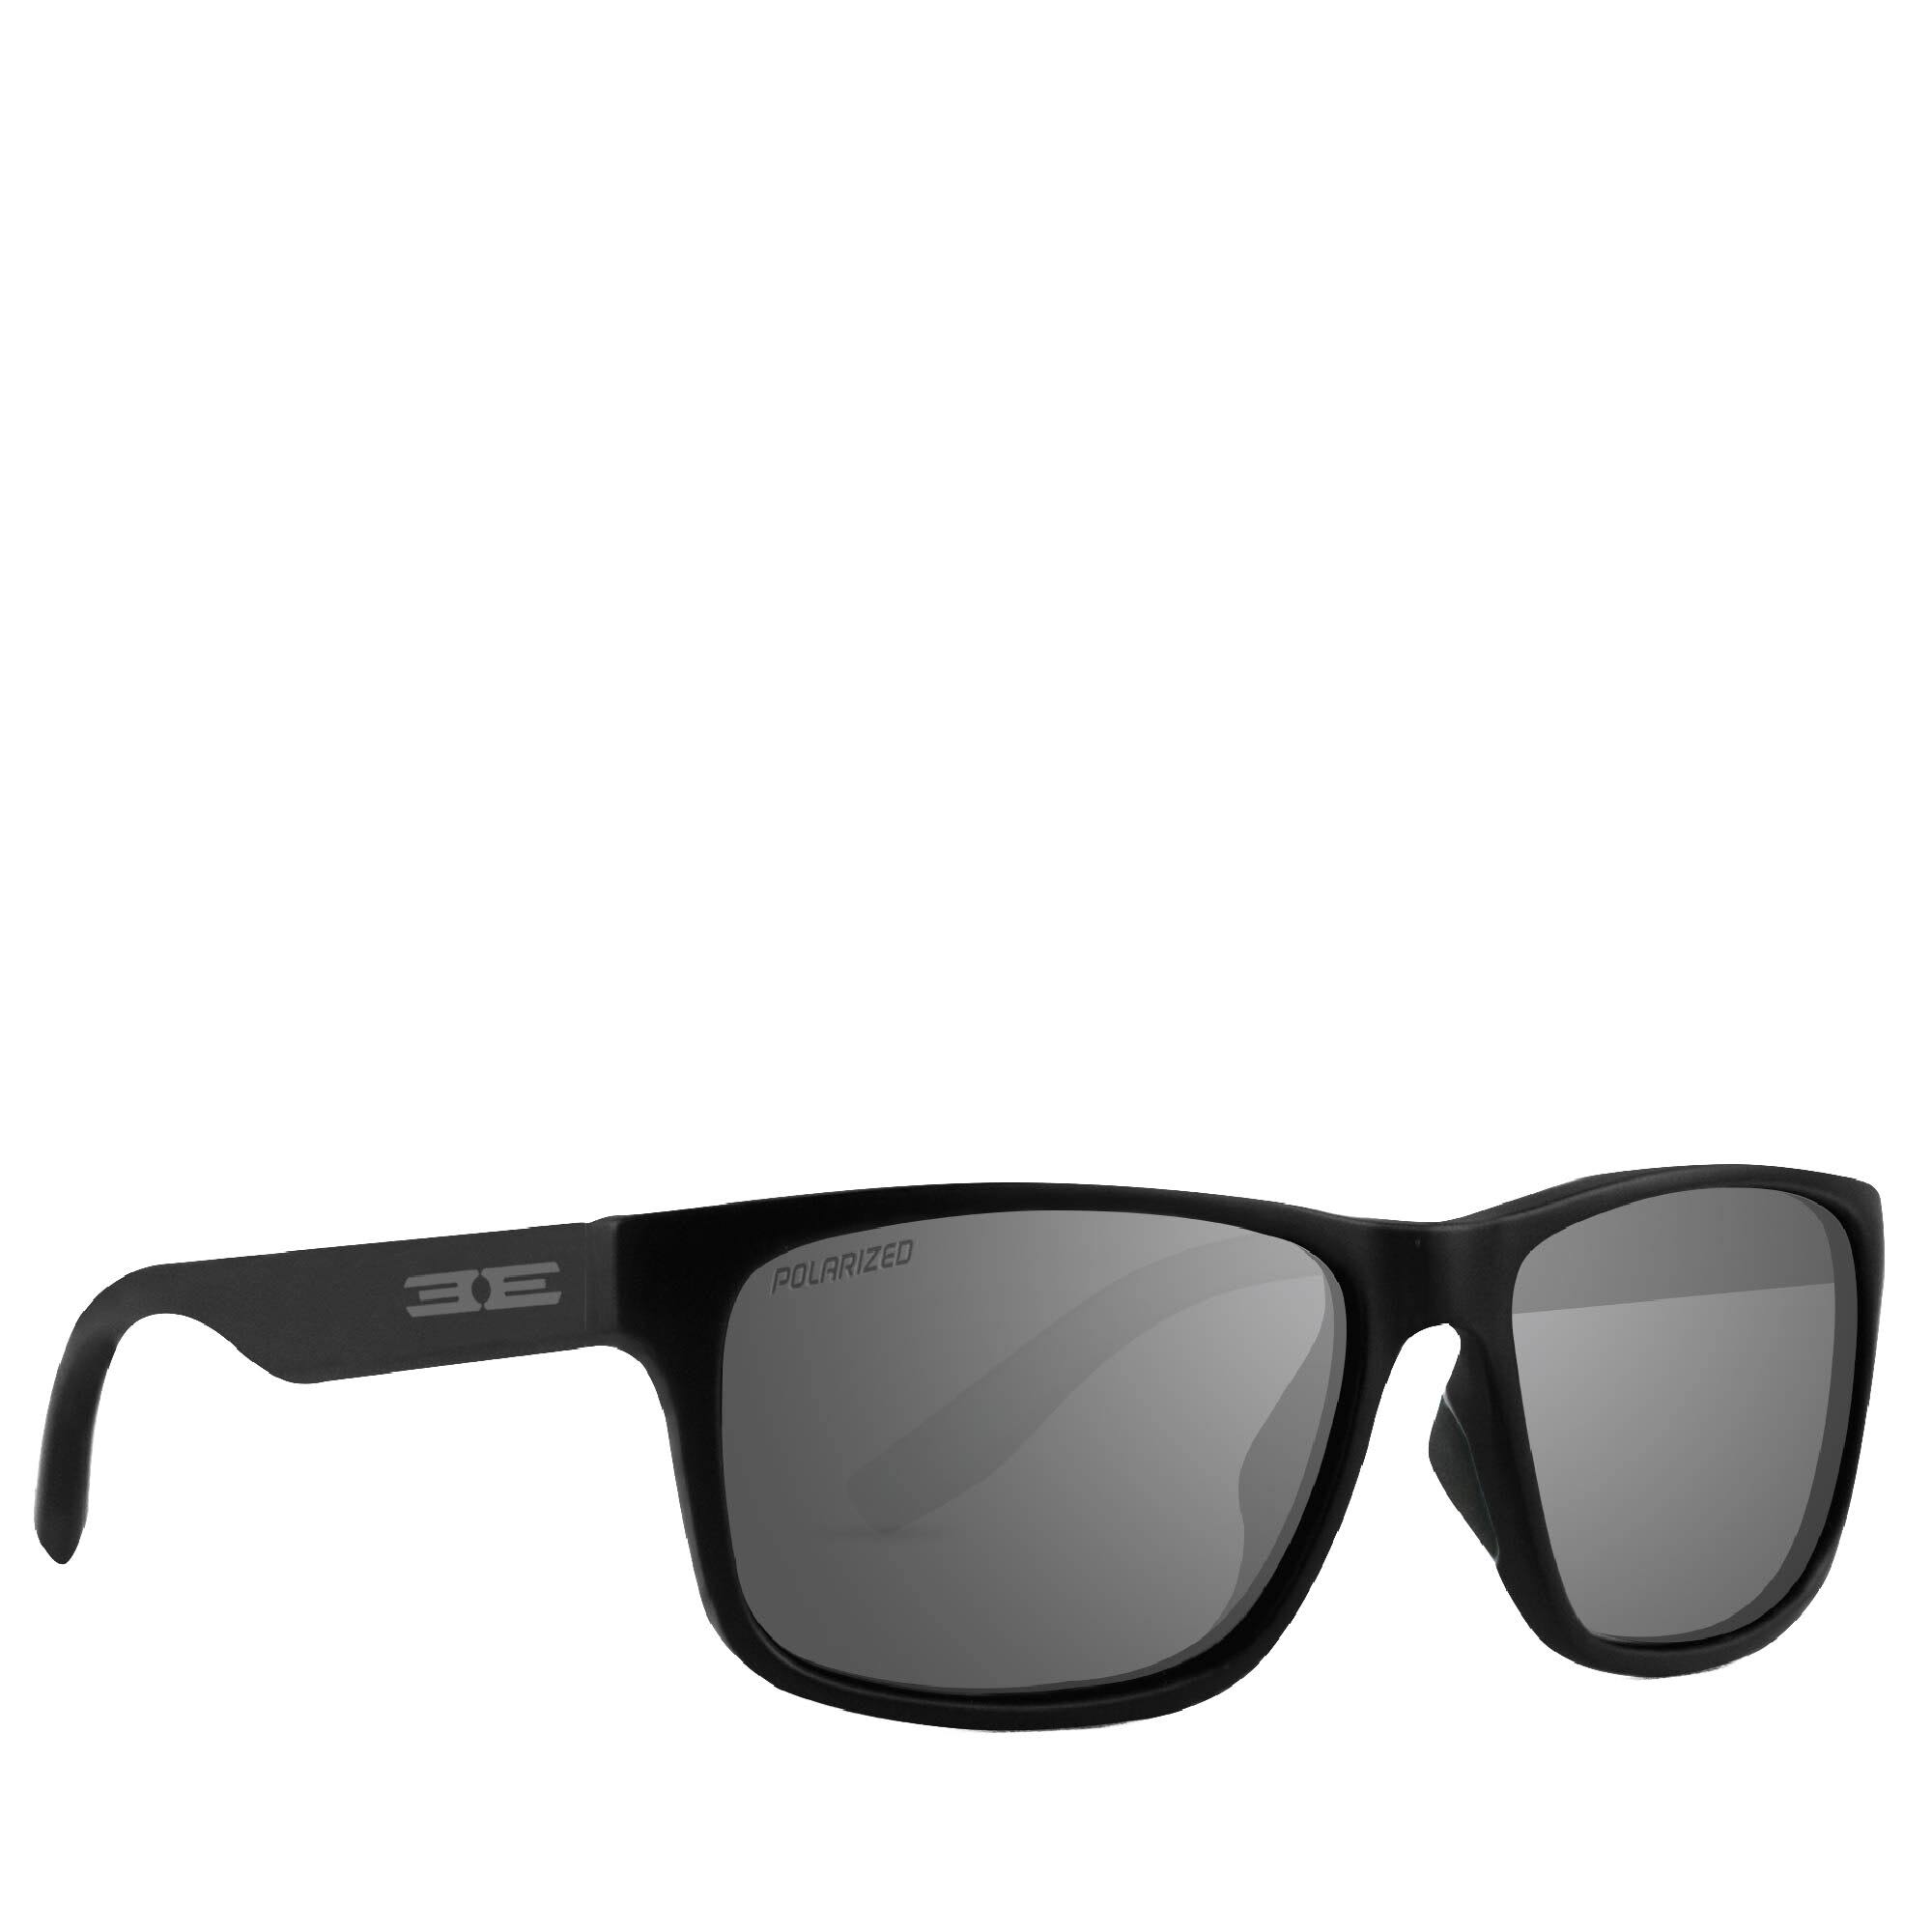 Epoch Eyewear Delta Golf Sport Sunglasses Black Frame Smoke Polarized Lenses